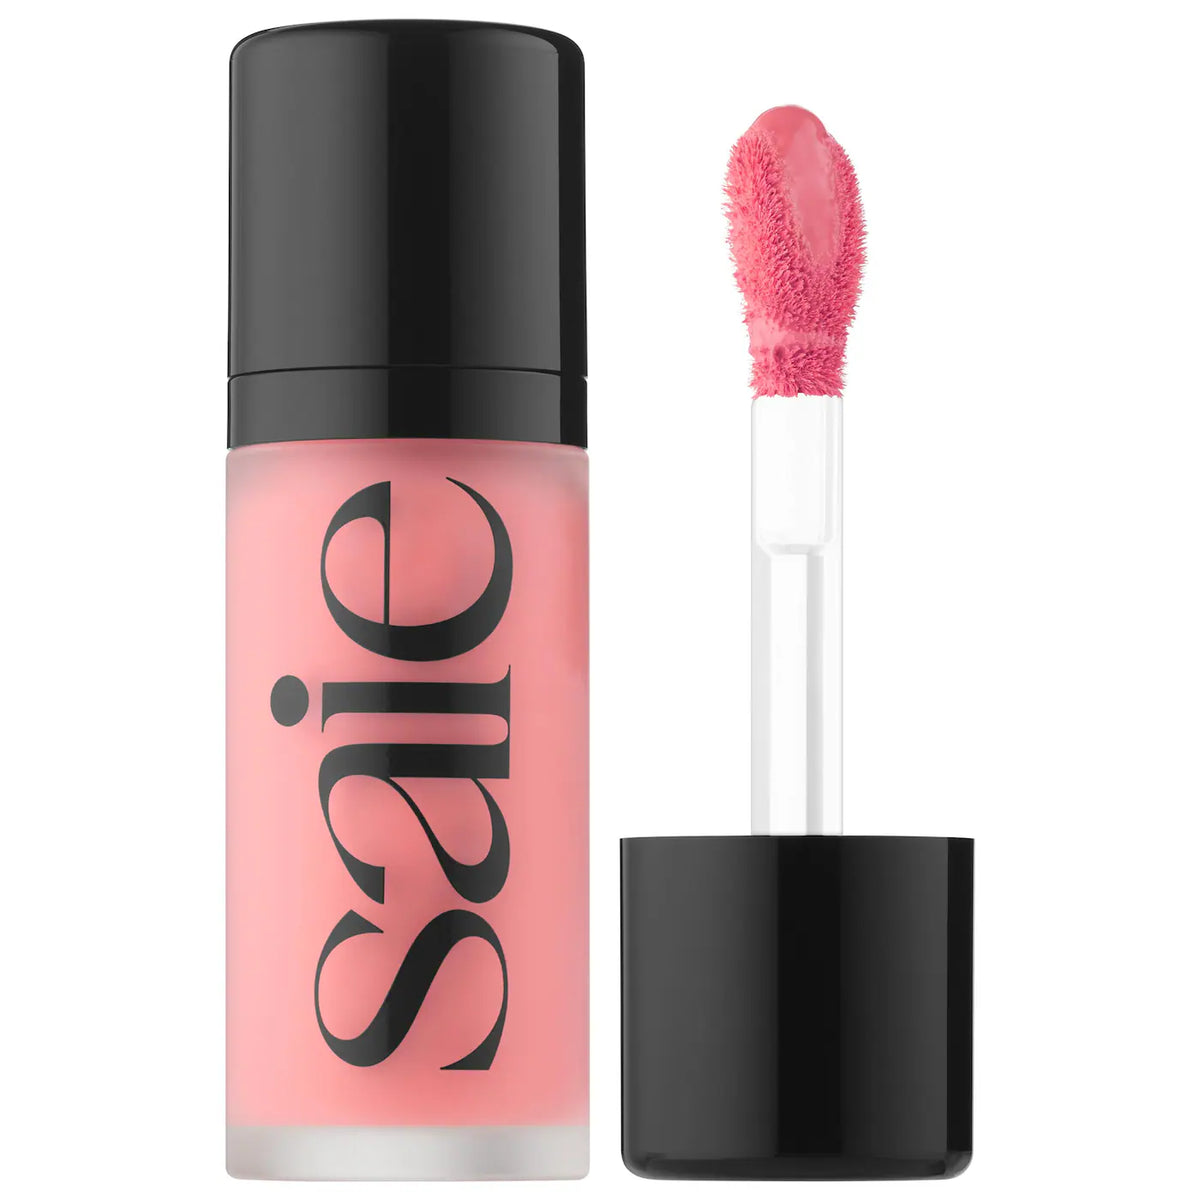 Saie Dew Blush Blendable Liquid Cheek Blush blush Volare Makeup Sweetie - neutral pink  